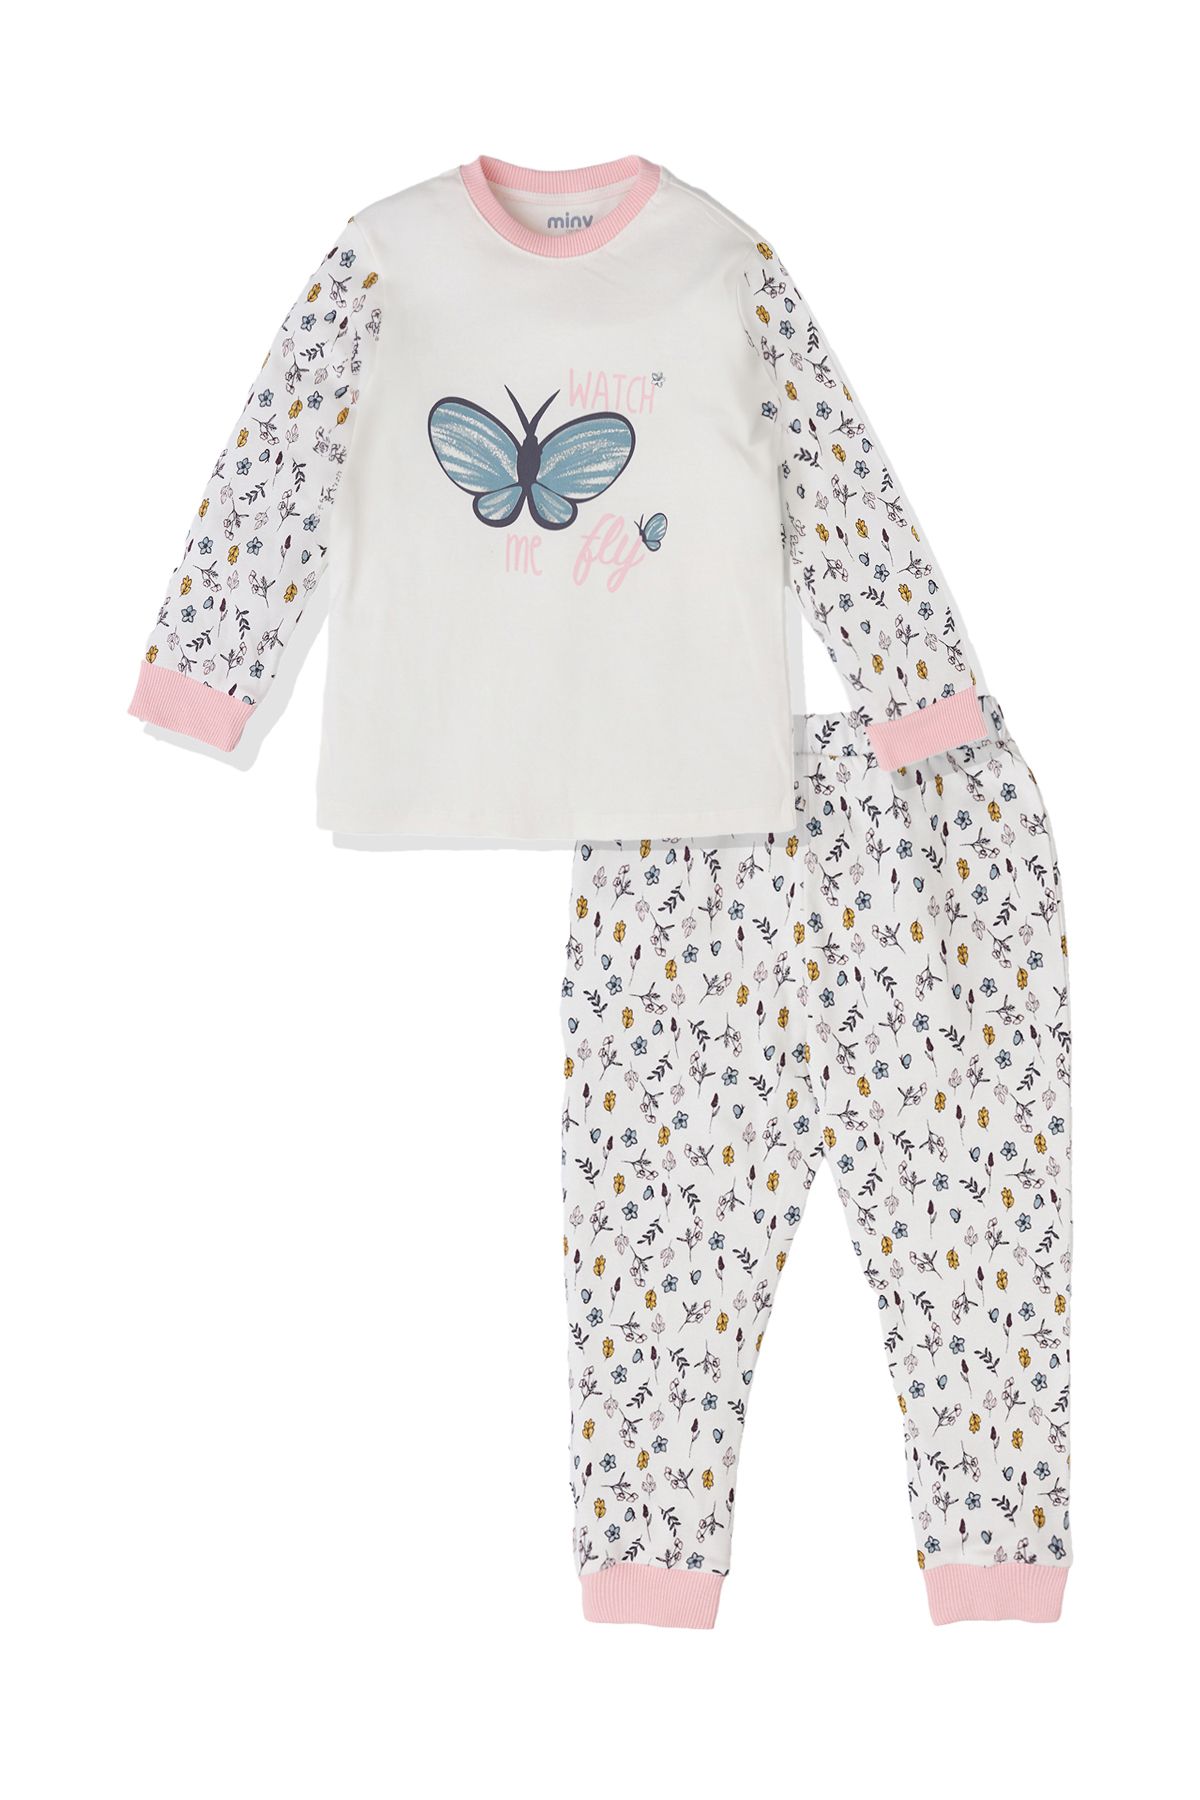 Miny Center Kız Çocuk Pijama Takım